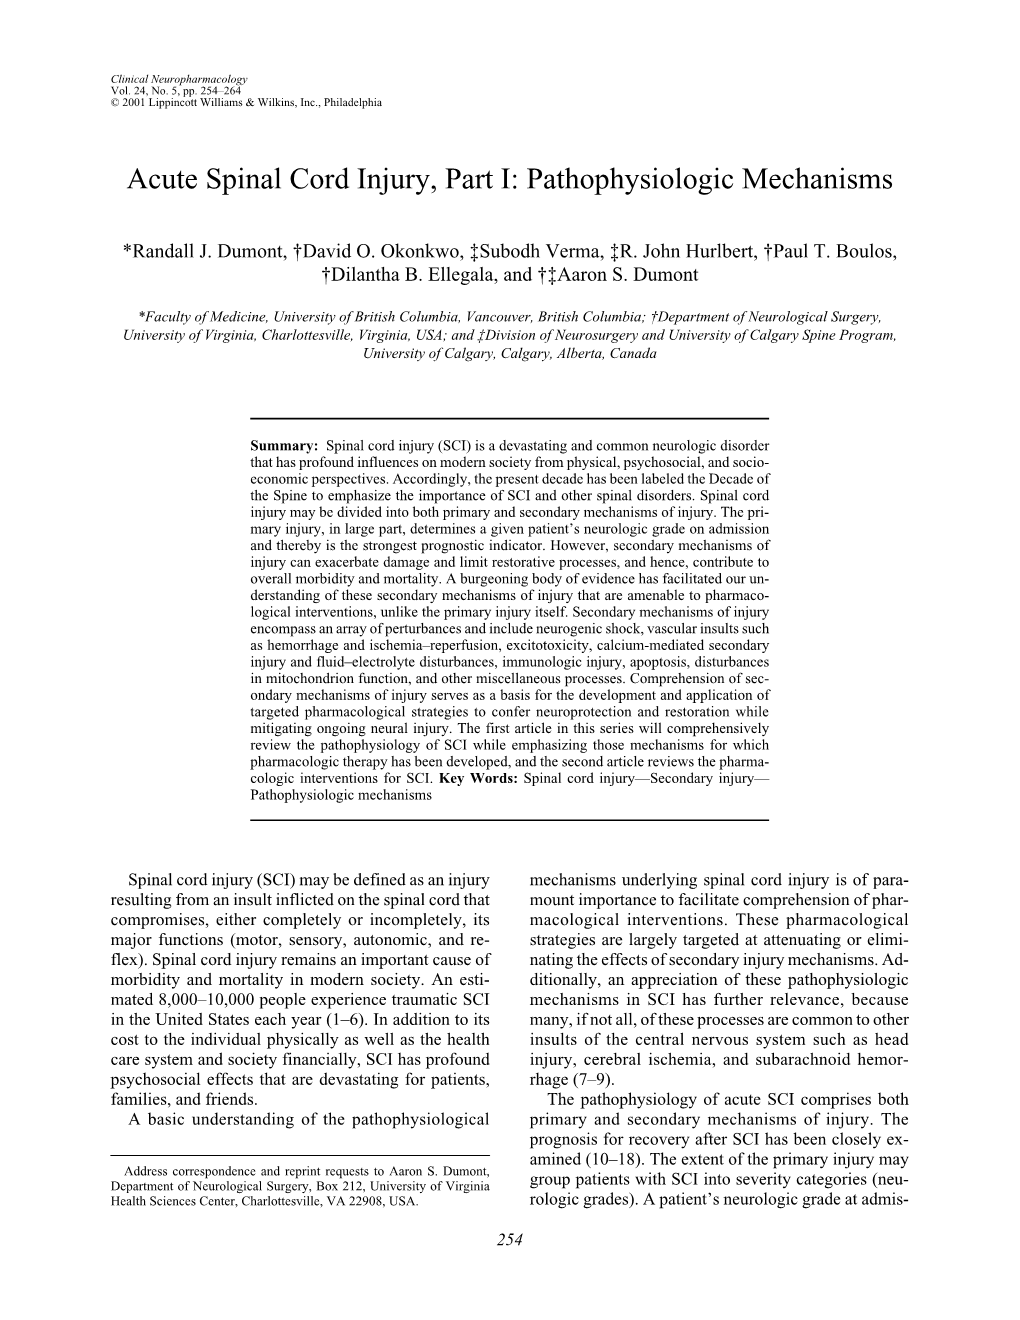 Acute Spinal Cord Injury, Part I: Pathophysiologic Mechanisms